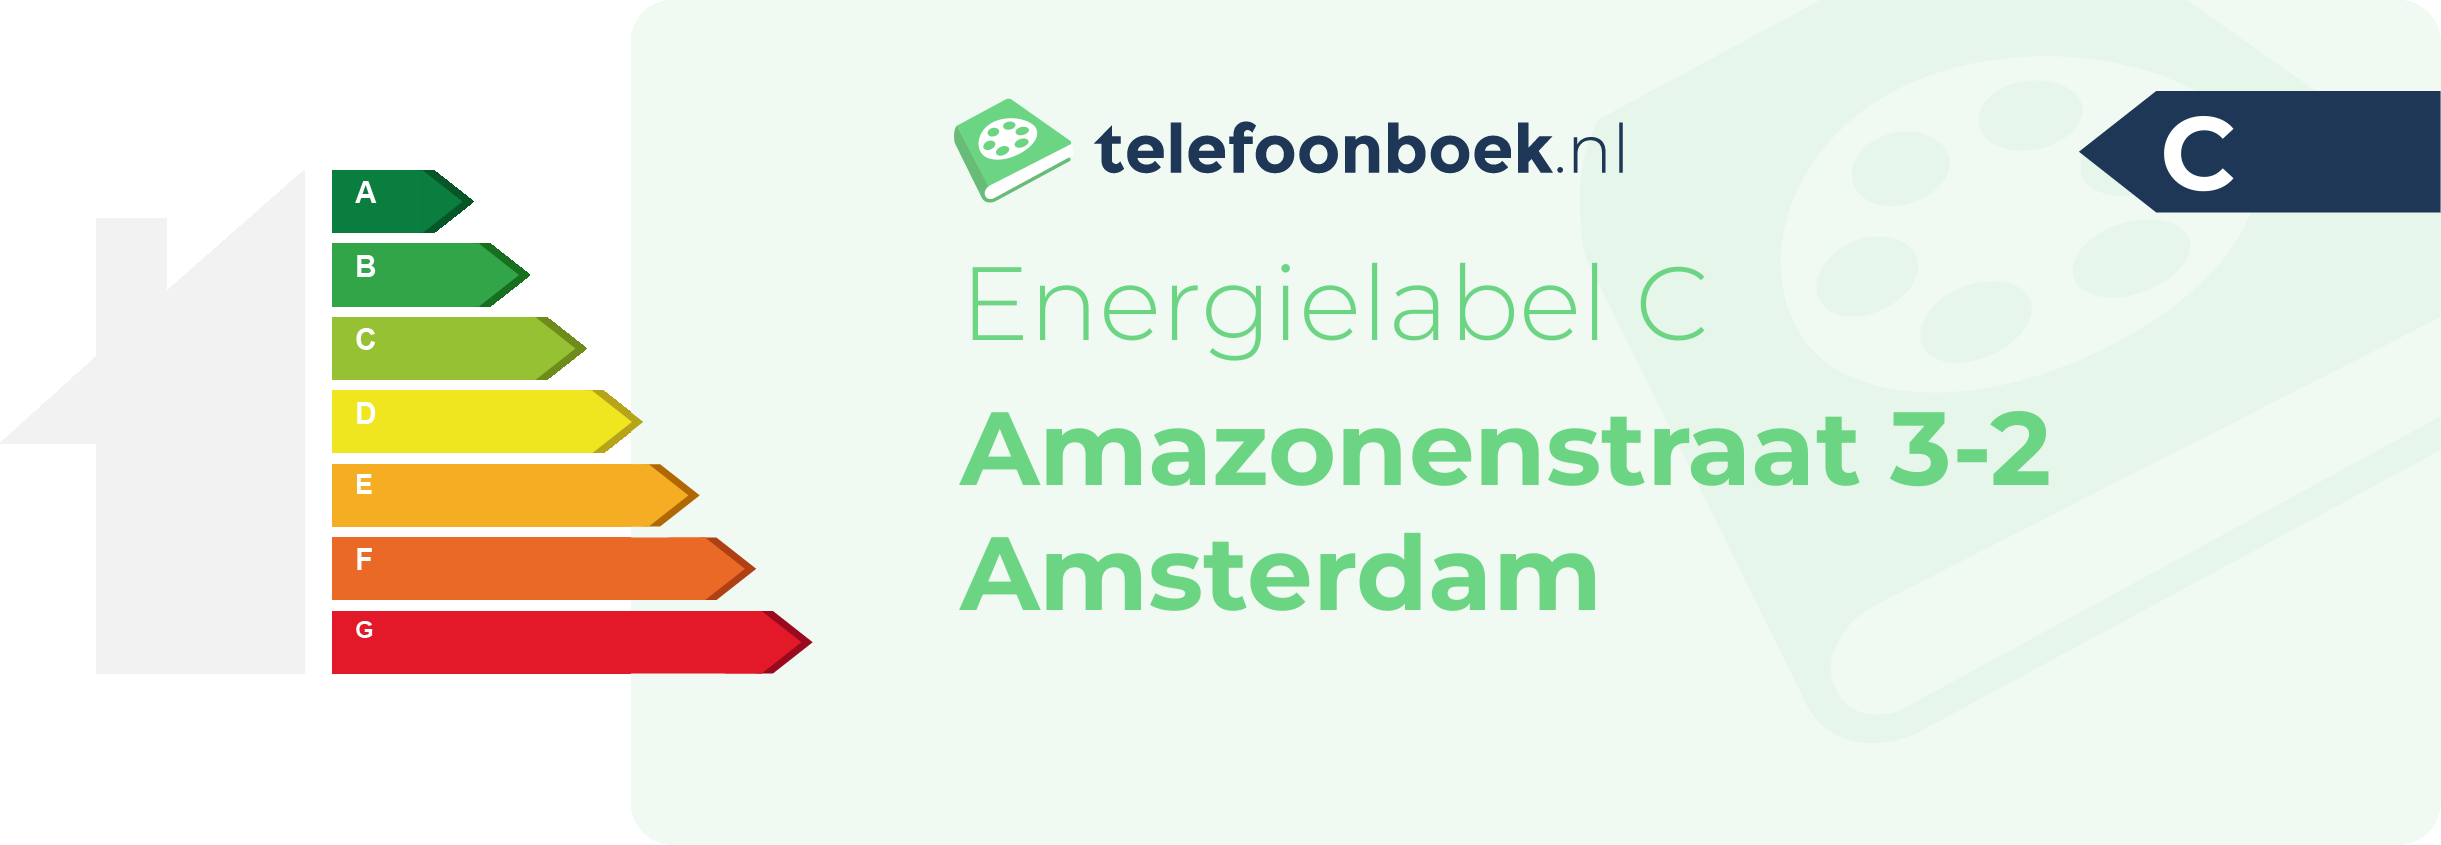 Energielabel Amazonenstraat 3-2 Amsterdam